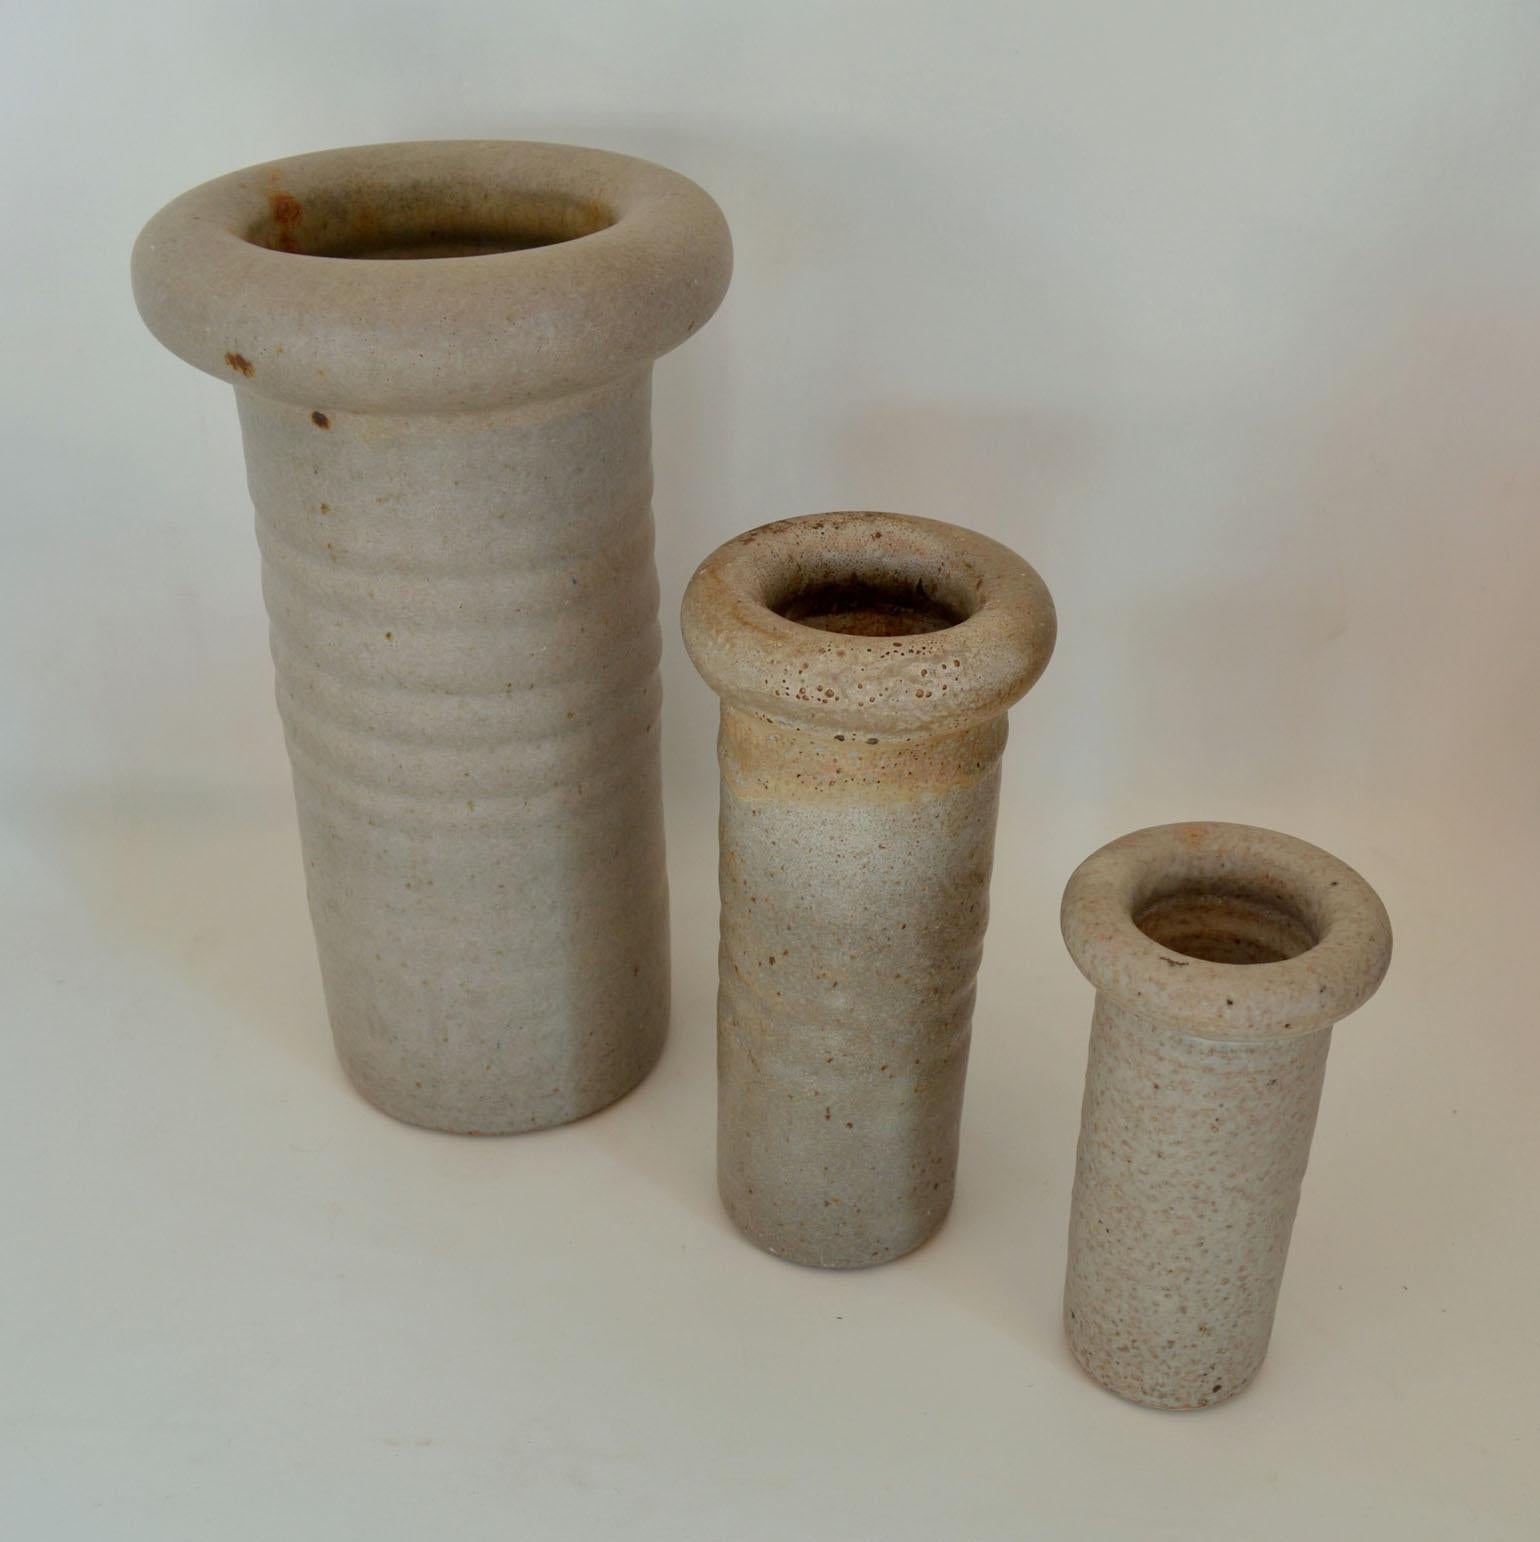 Ceramic Studio Vases by Knepper, Mobach 1960s, Cream and White 2